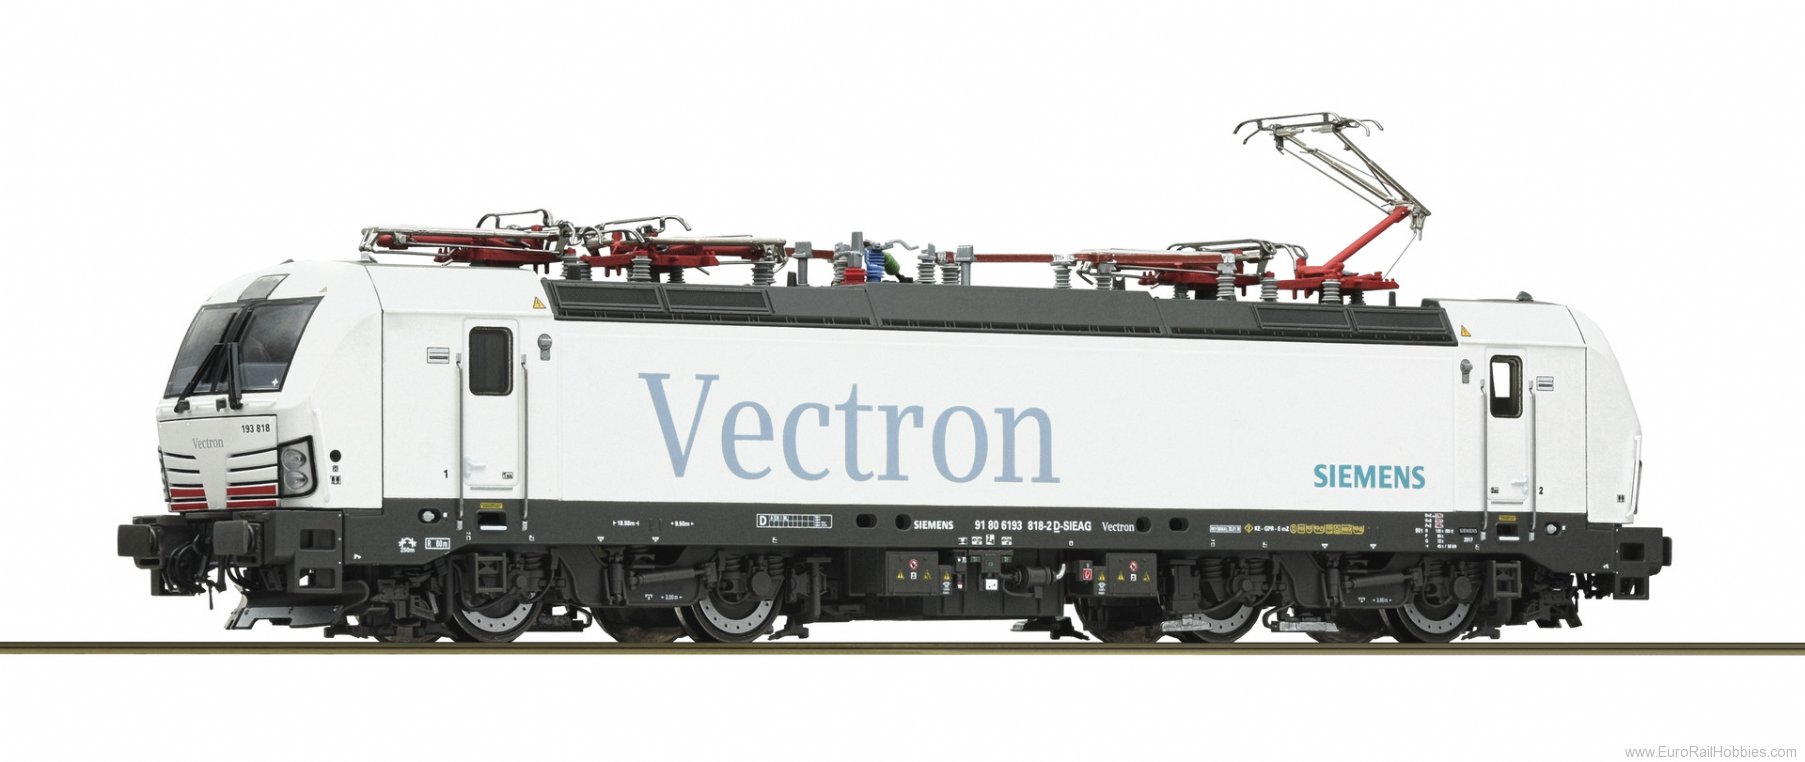 Roco 7510040 Electric locomotive 193 818-2, Siemens (DCC S